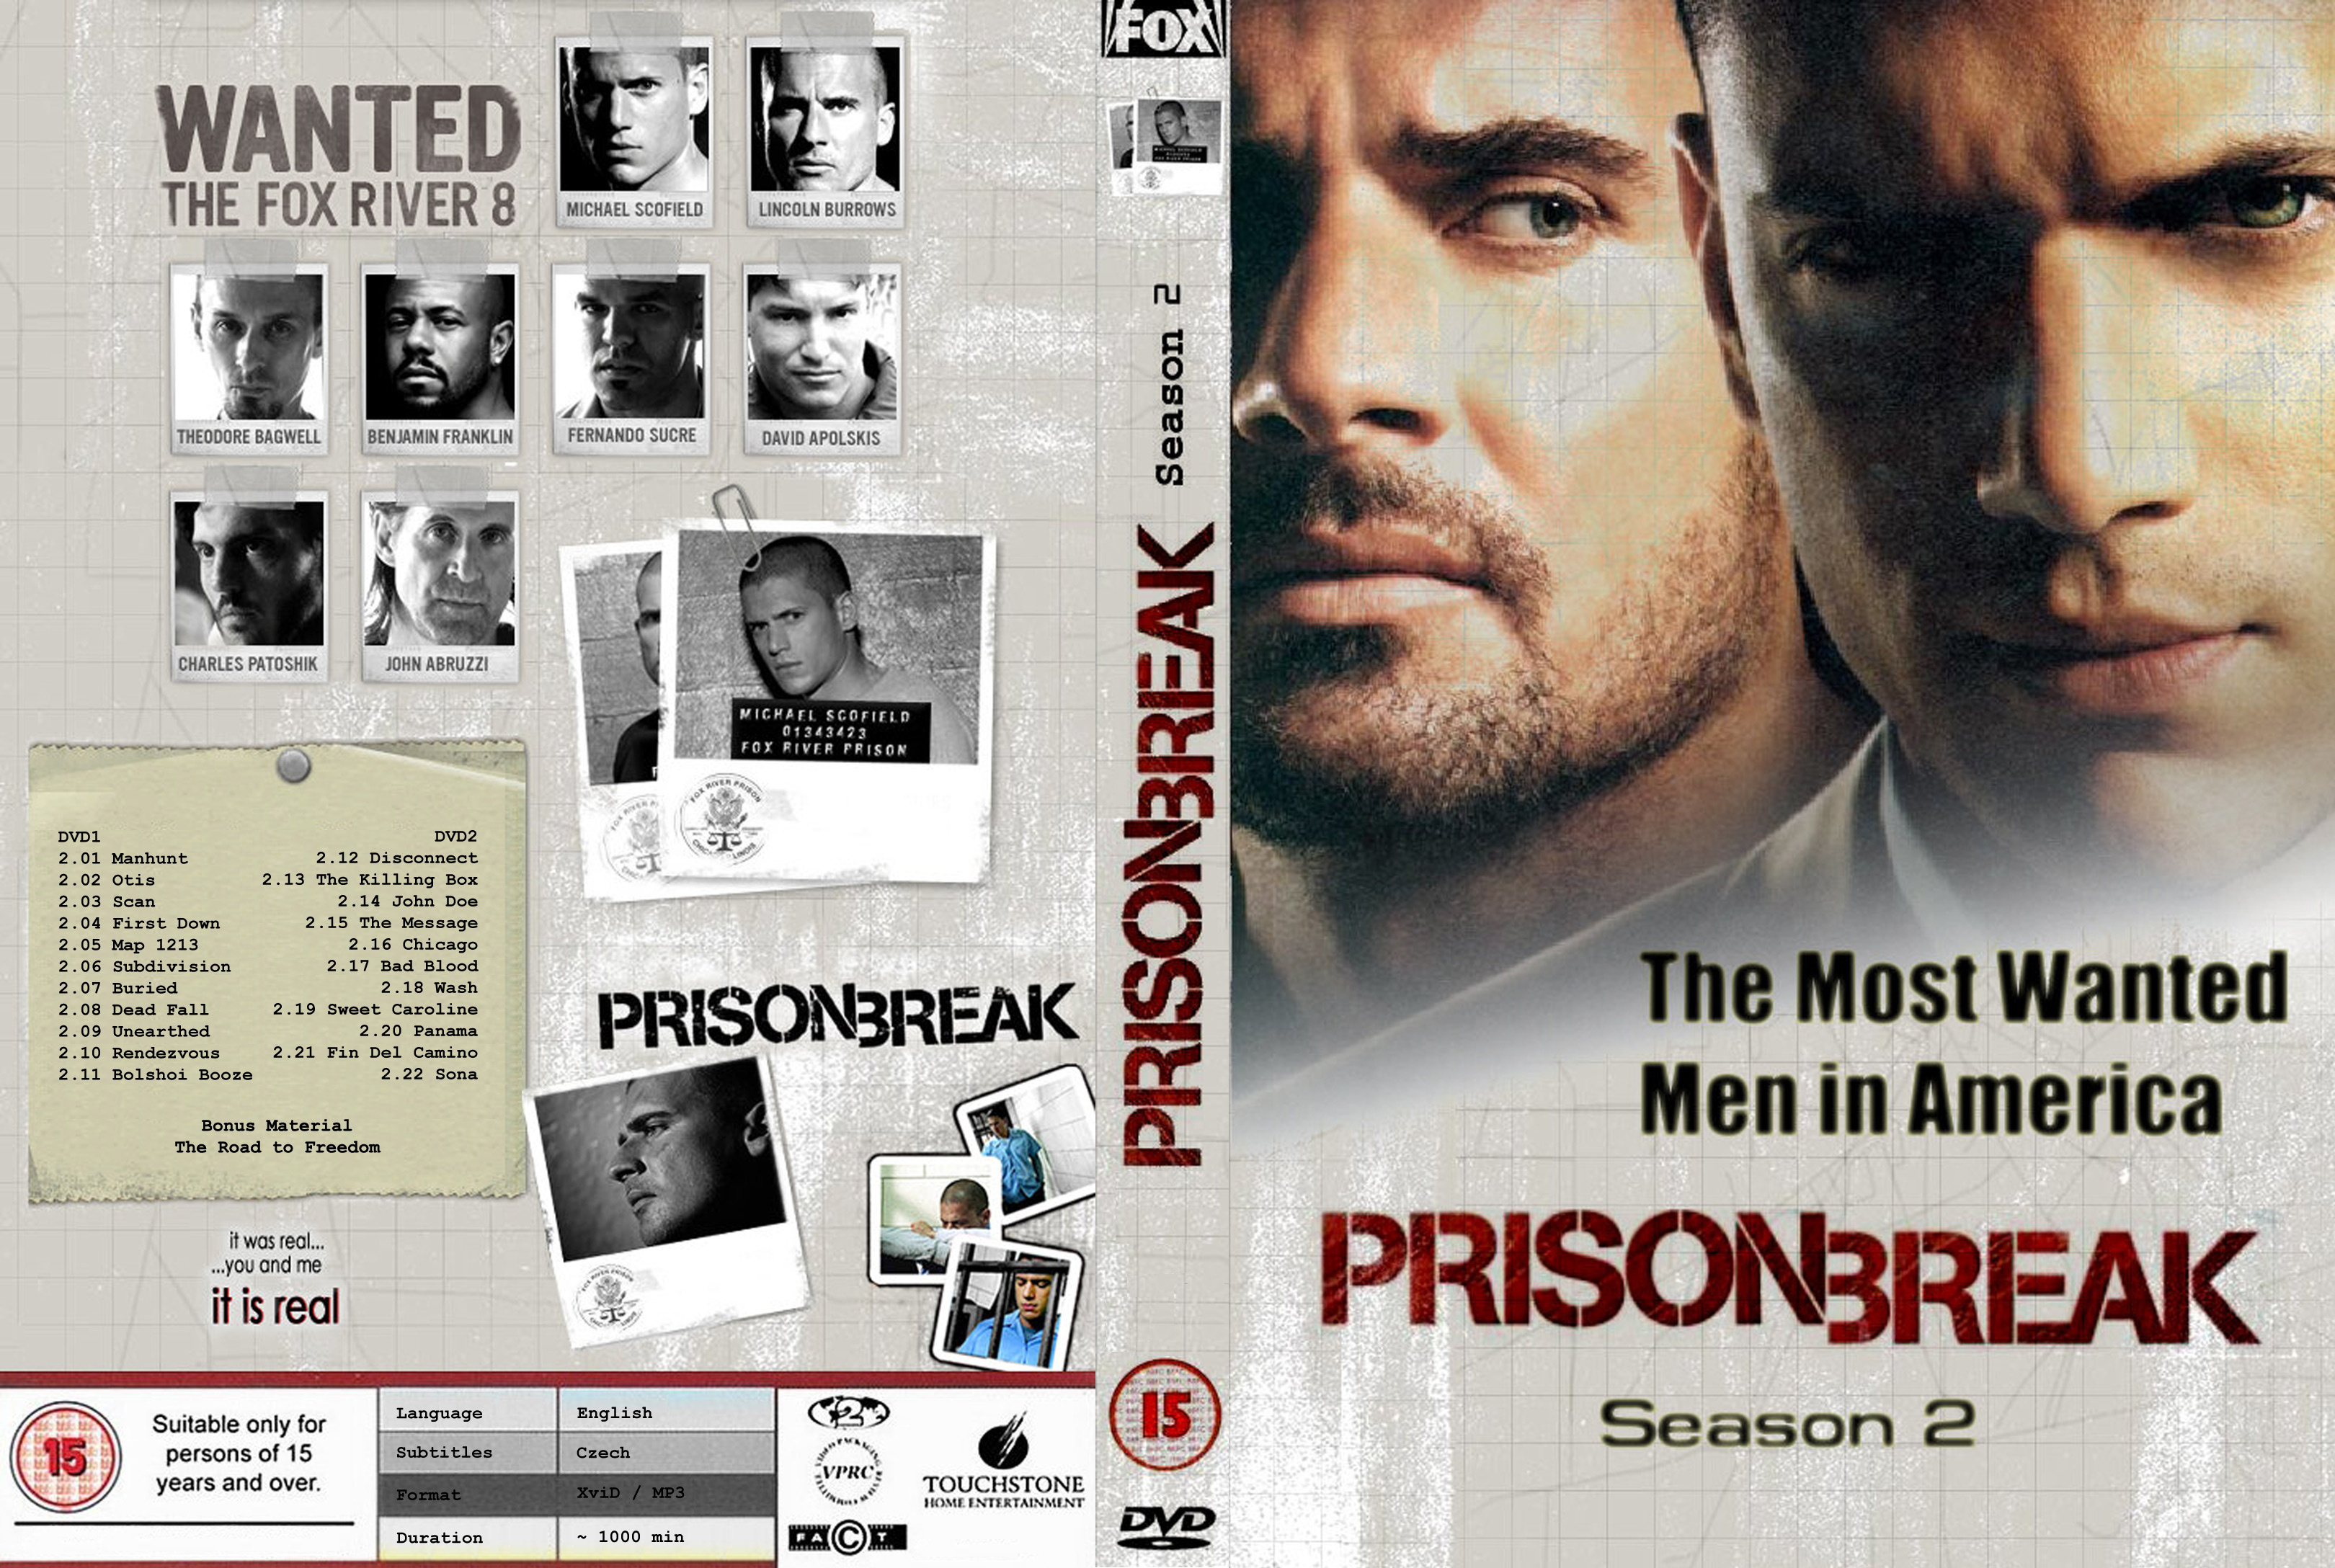 prison break season 2 episode 1 watch online with english subtitles